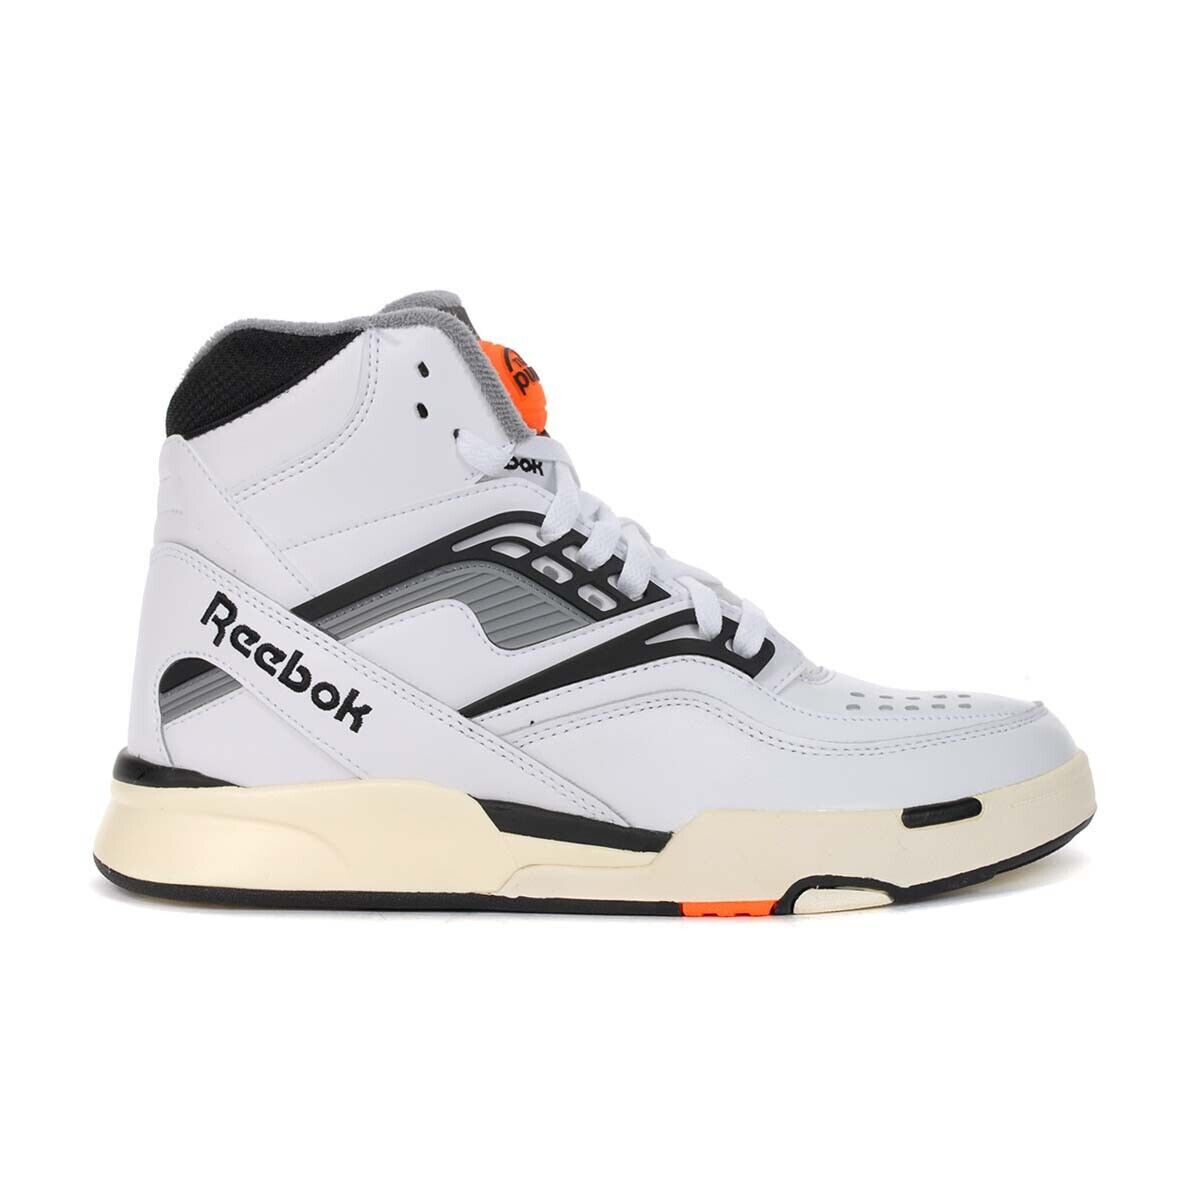 Reebok Men's Pump Tz White/Black/Wild Orange Basketball Sneakers Hq8803